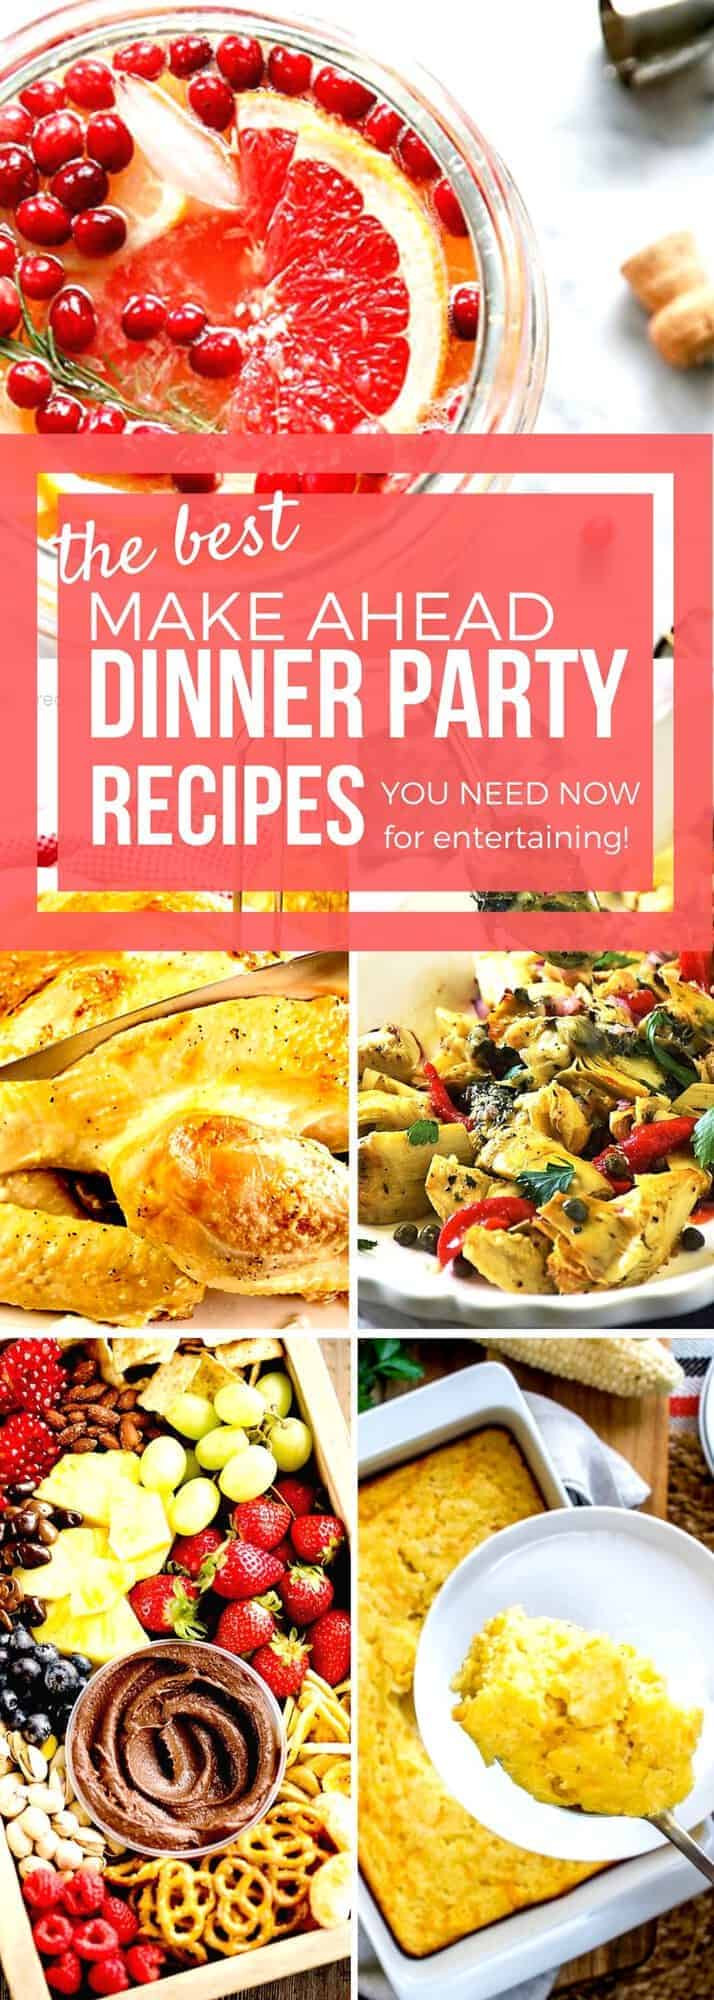 Make Ahead Dinner Recipes
 Make Ahead Dinner Party Recipes SundaySupper